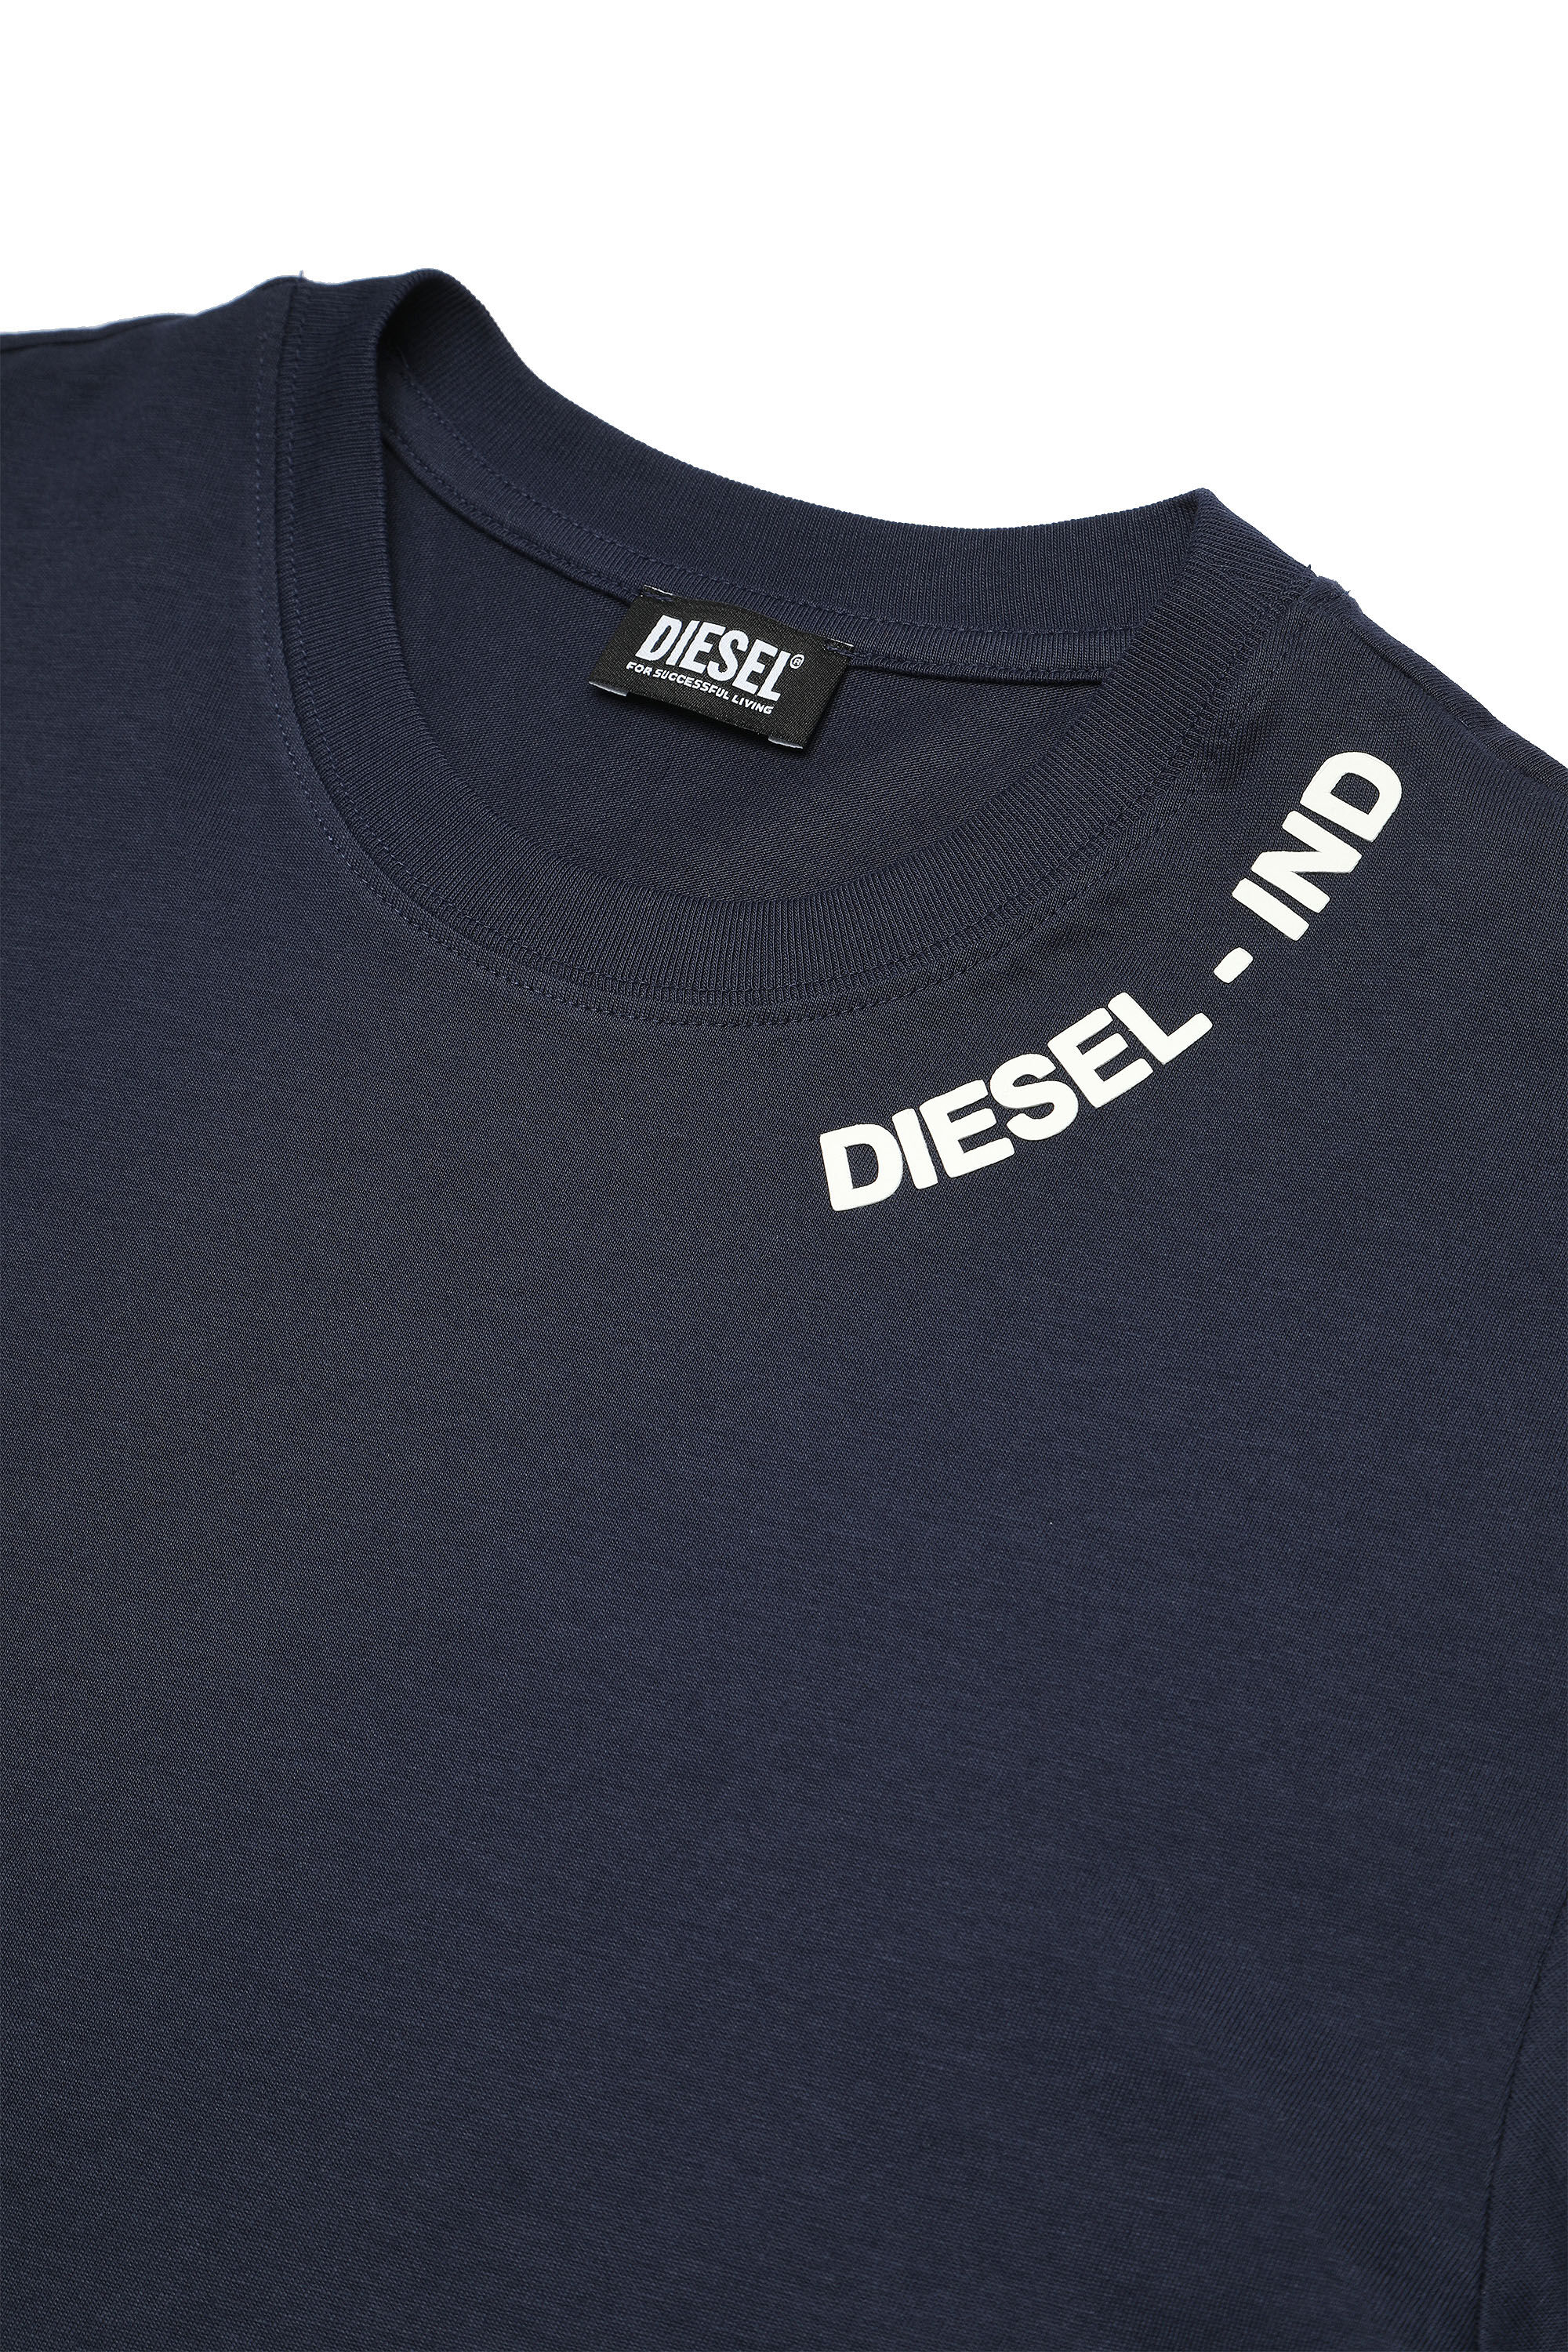 Diesel - UMSET-DIEGOLS-JULIOJ, Bleu - Image 3